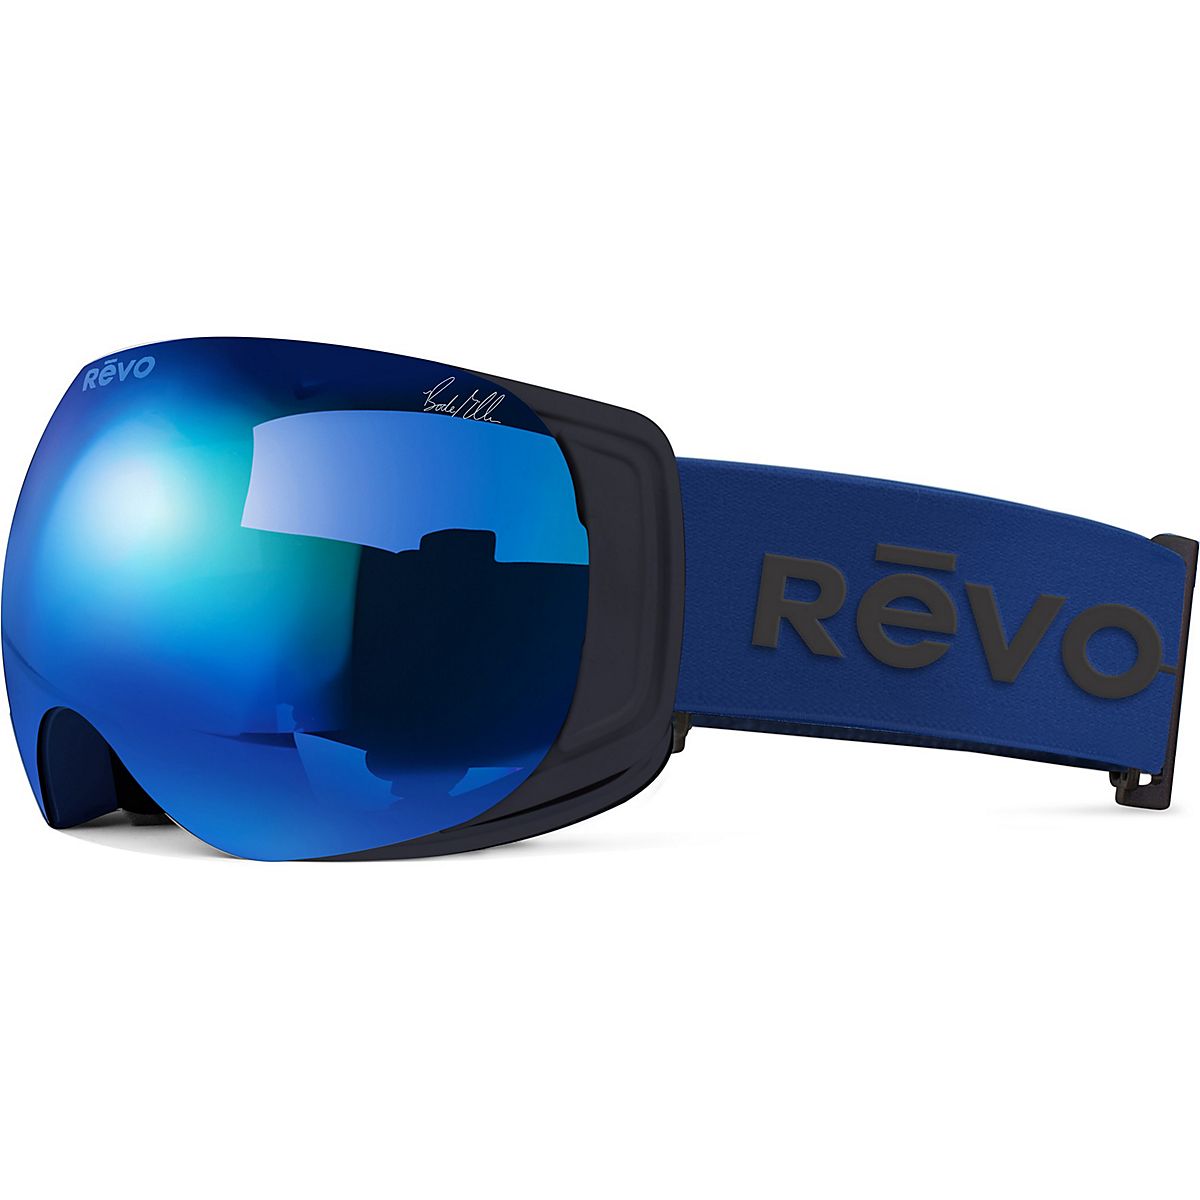 Revo Bode Miller No. 5 Ski Goggles | Free Shipping at Academy